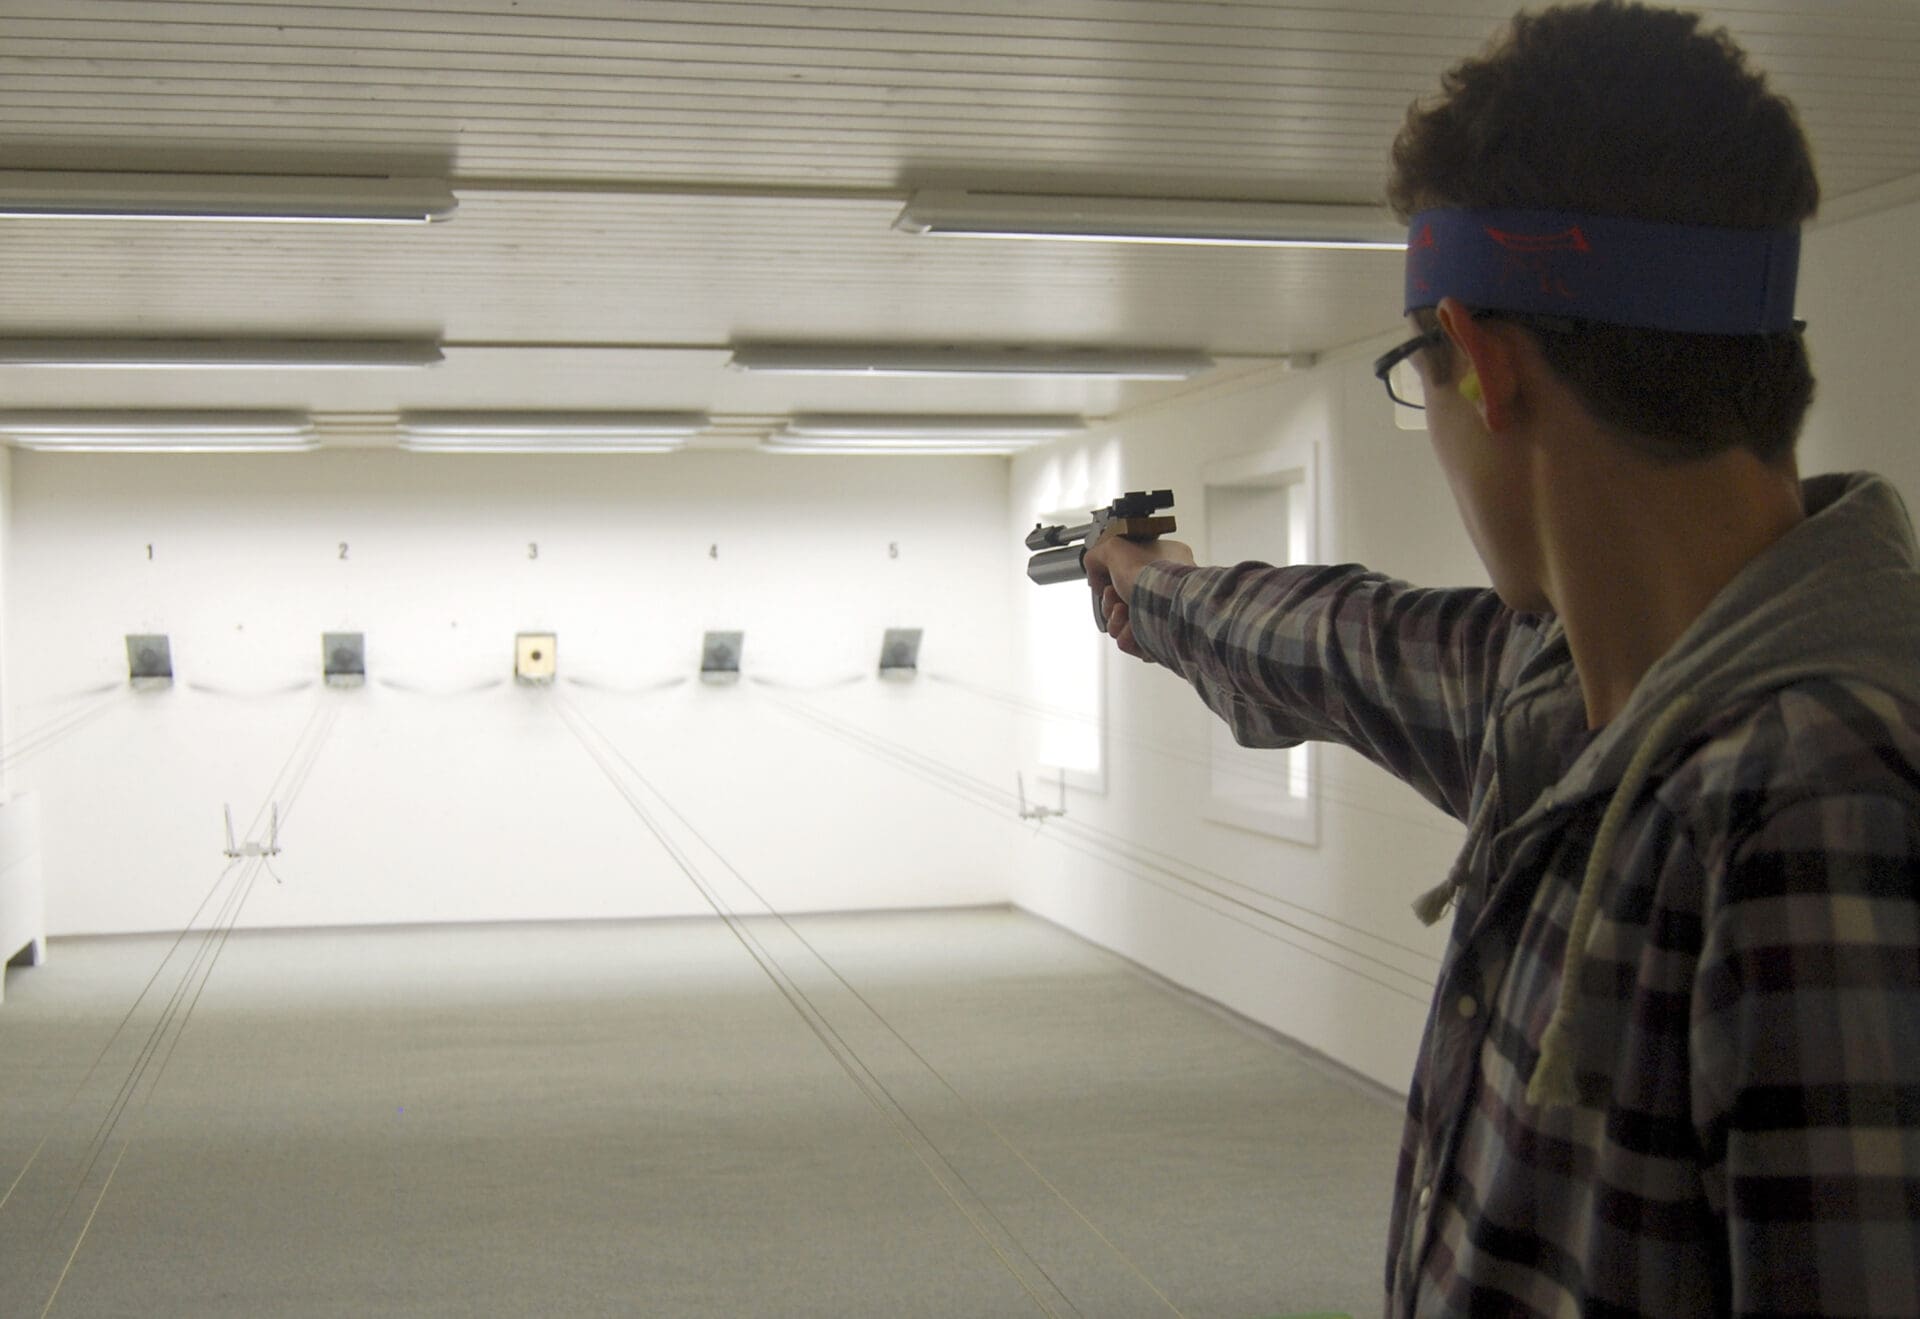 shooting range training practice